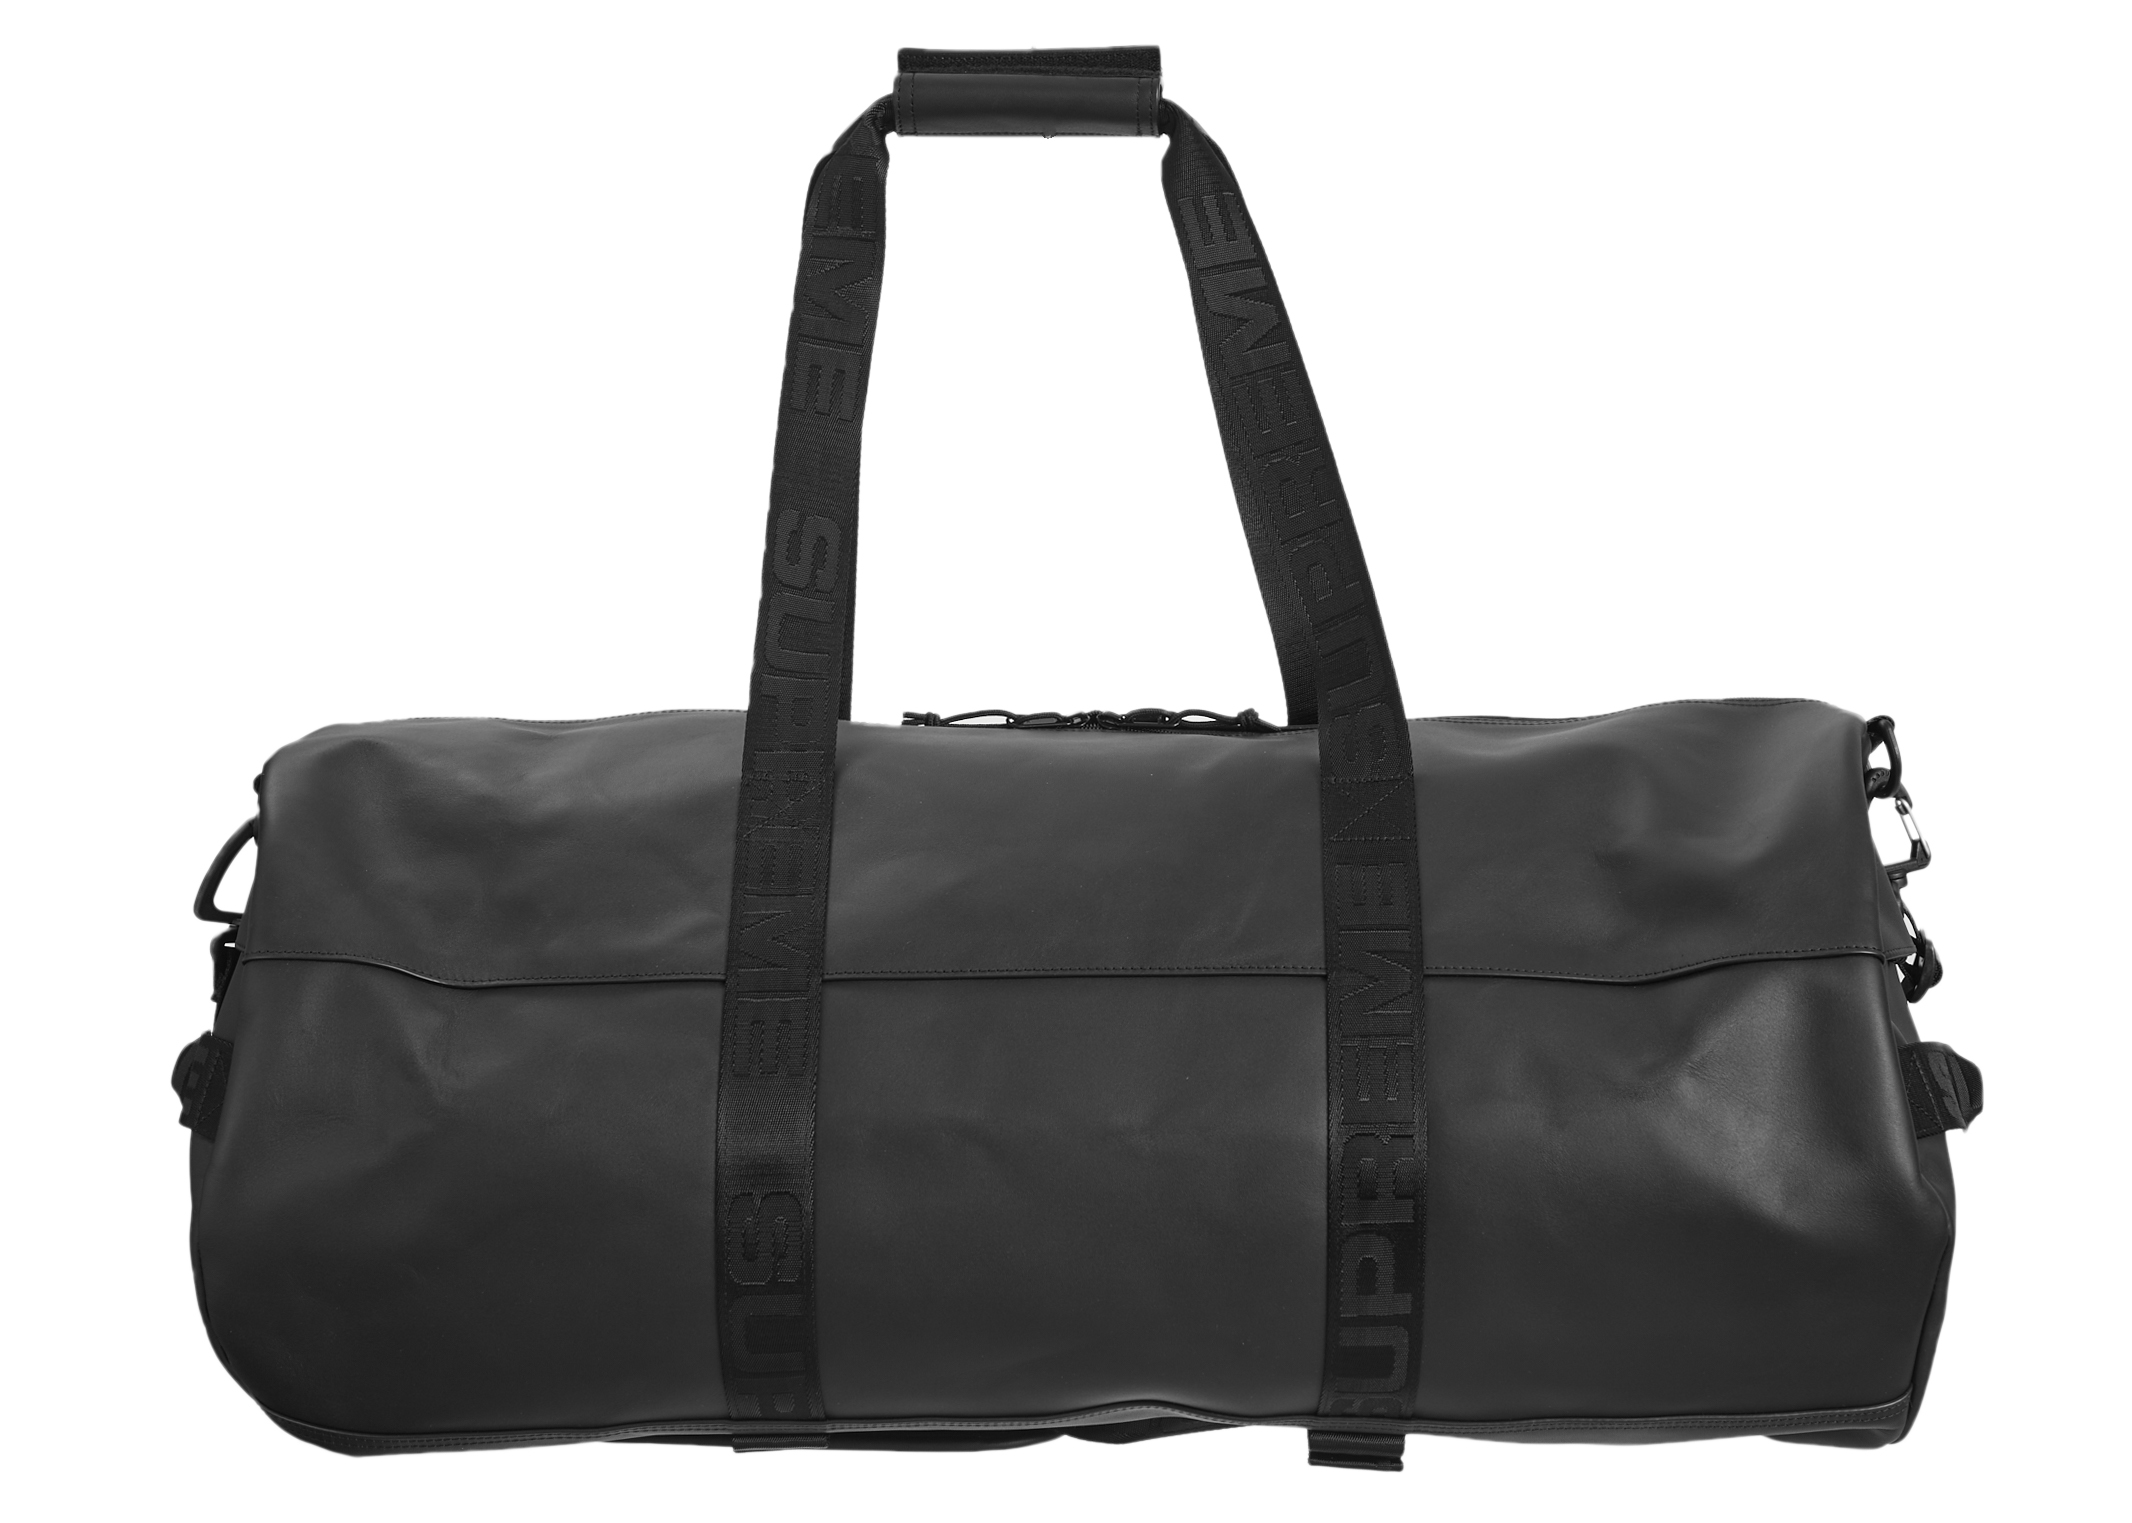 Supreme Leather Large Duffle Bag Black - FW23 - US